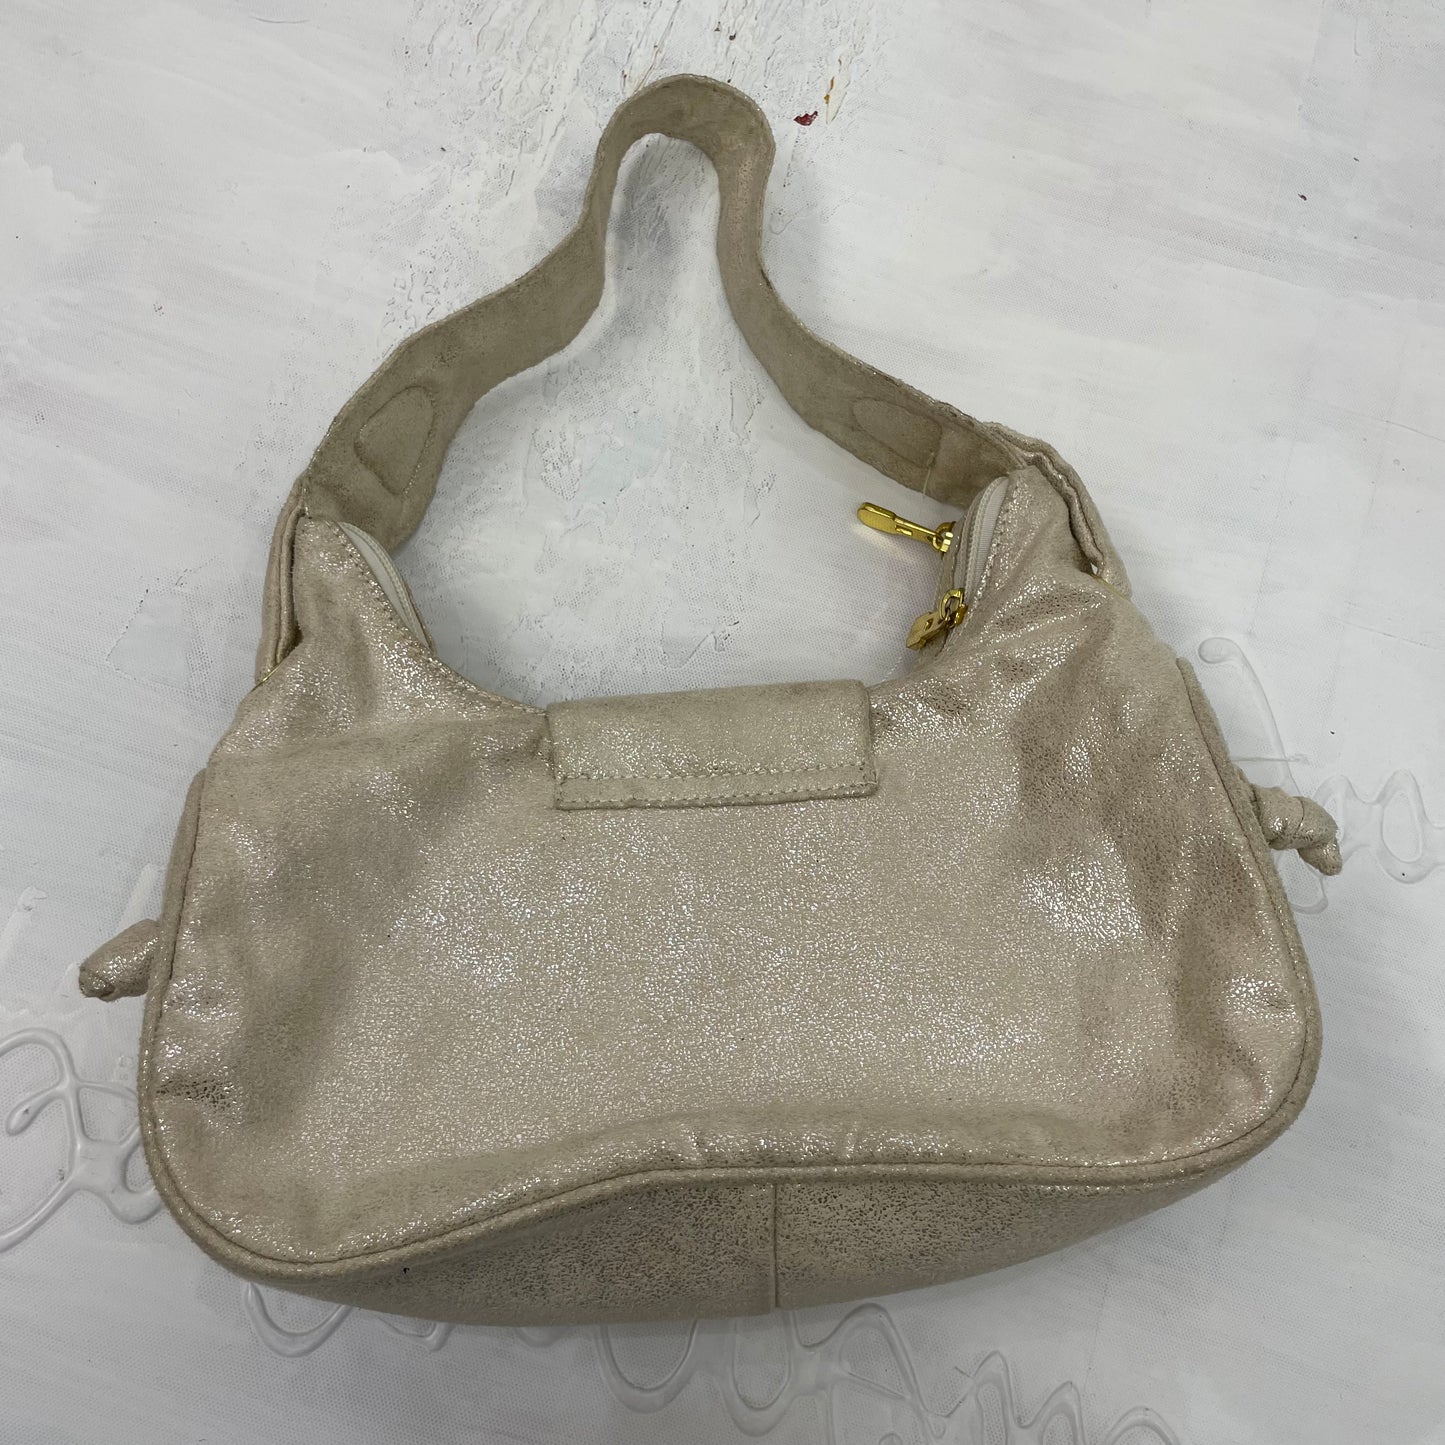 MOB WIFE DROP | beige metallic shoulder bag with gold embellishments